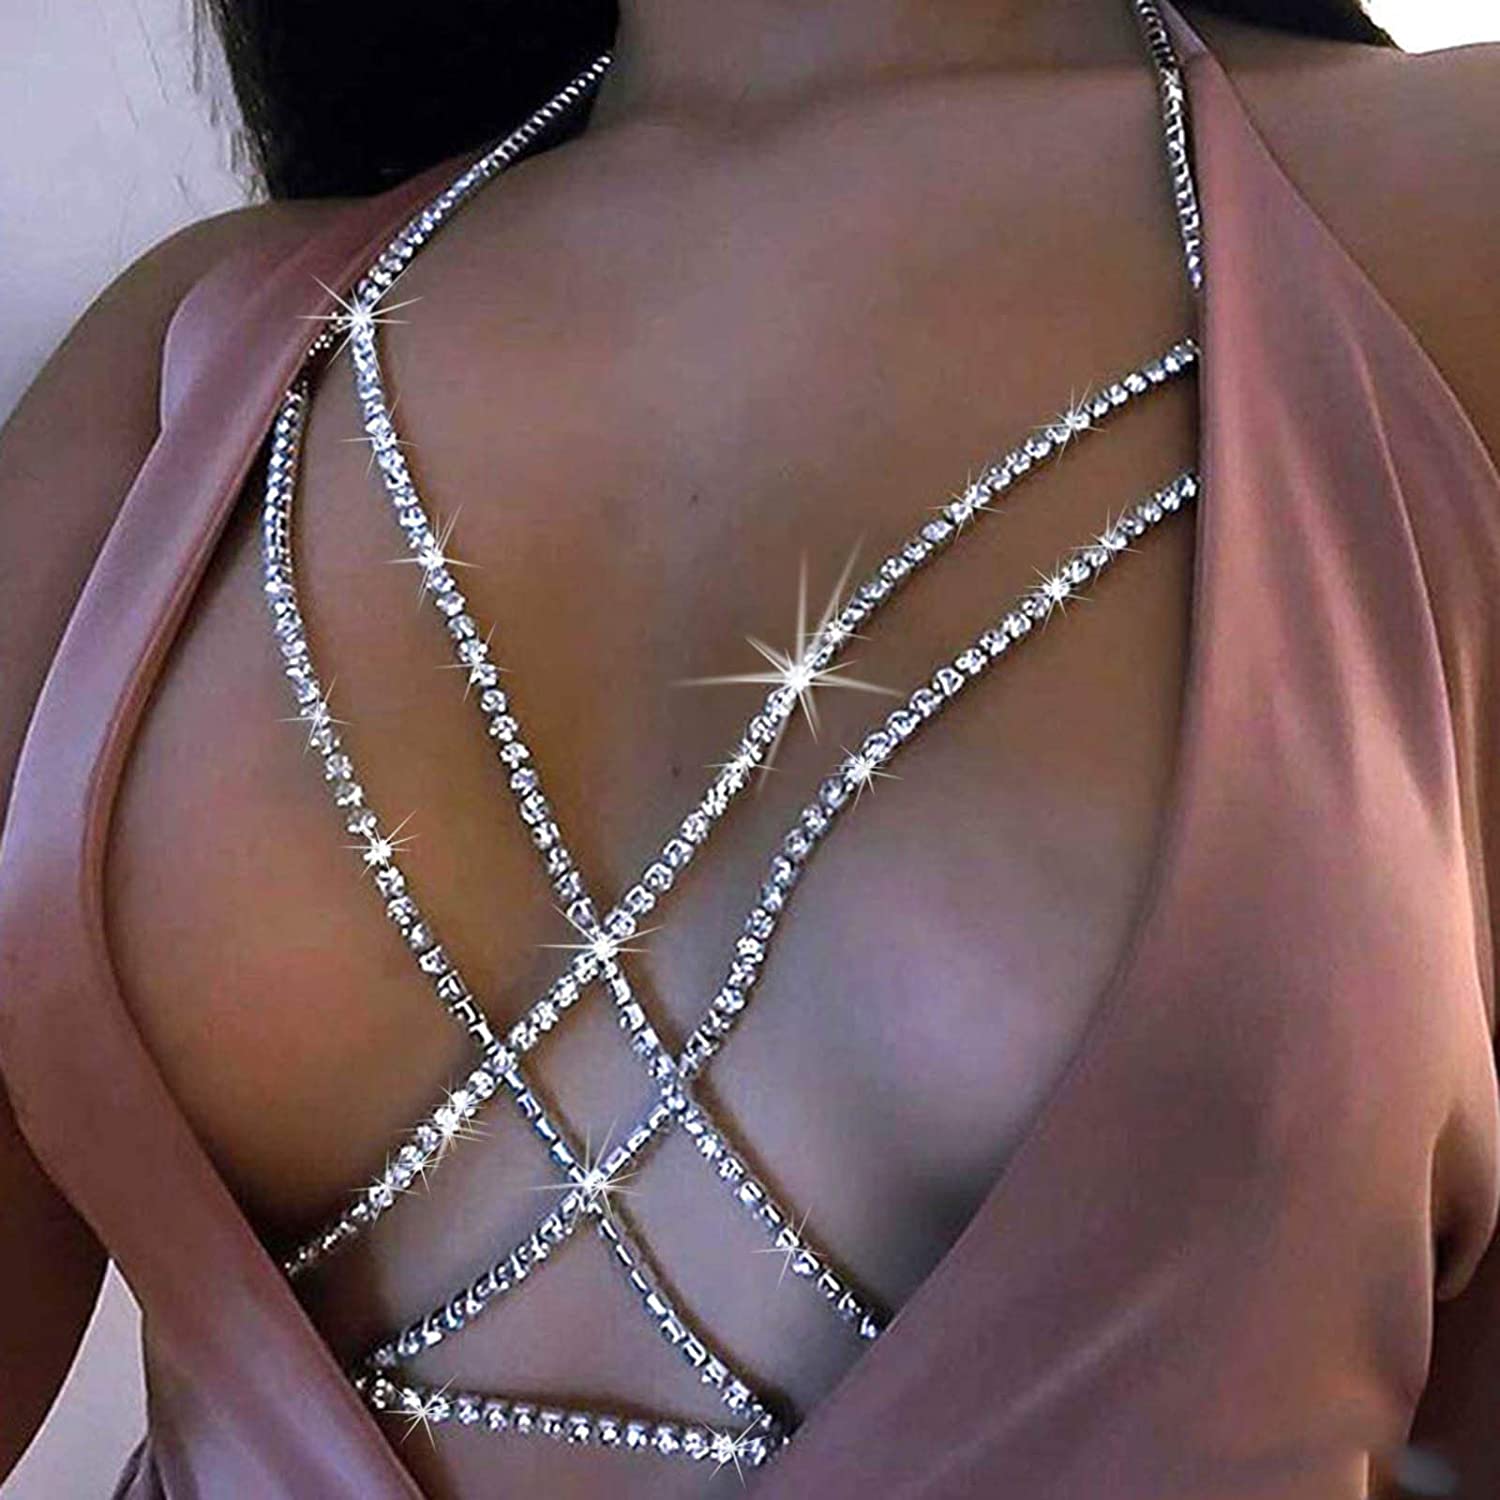  Nicute Rhinestone Body Chain Crystal Bra Bikini Chains